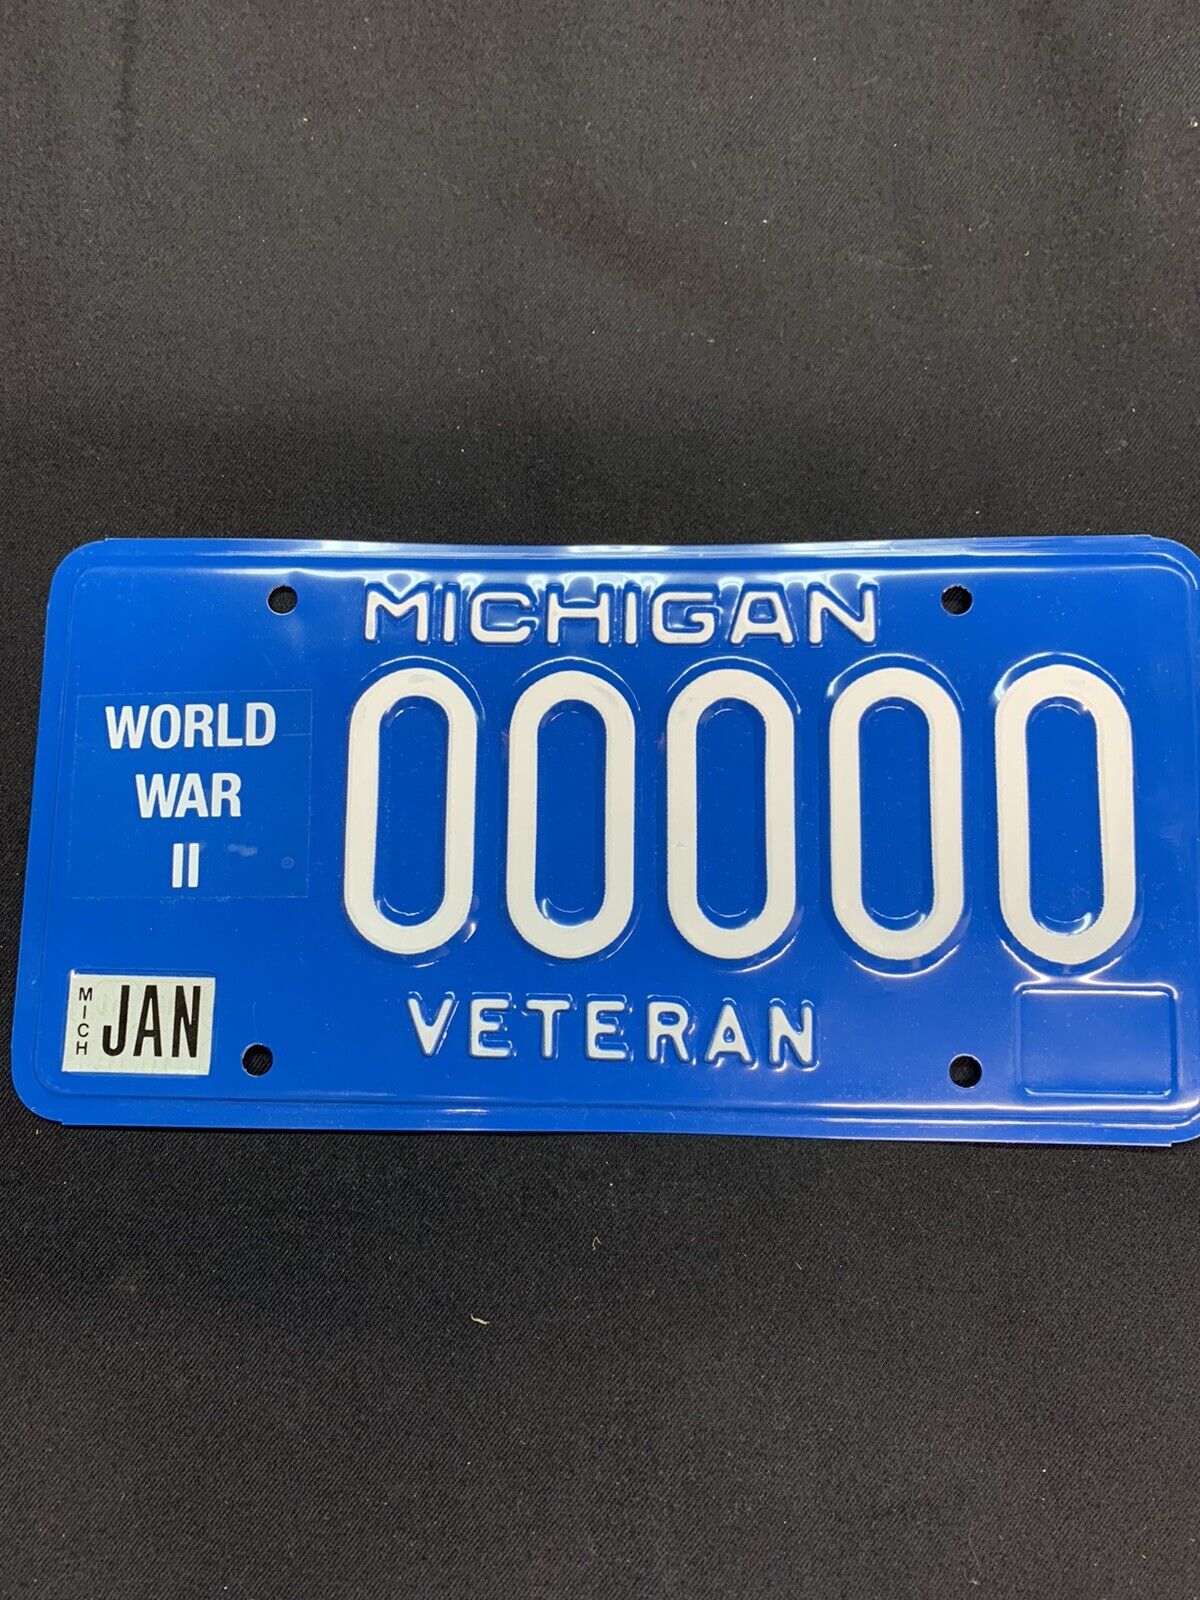 Michigan blue and white- Veteran World War II sample license plate 00000